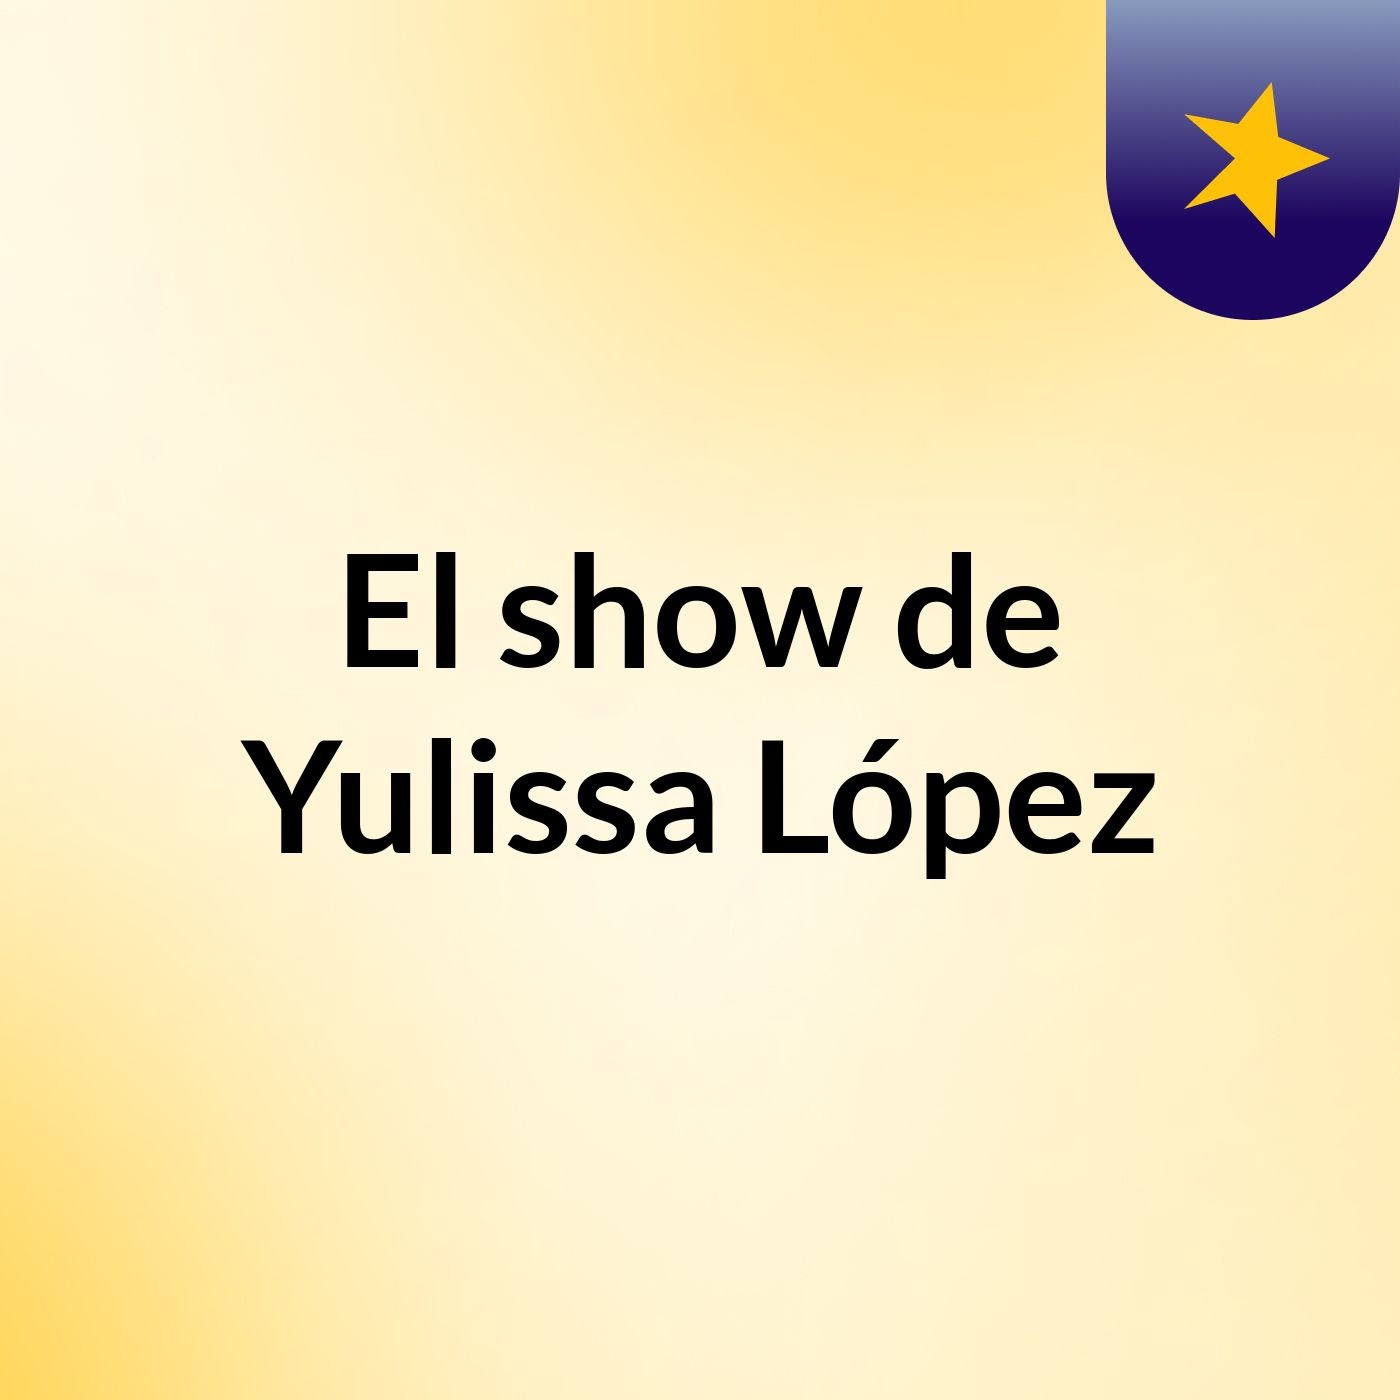 El show de Yulissa López